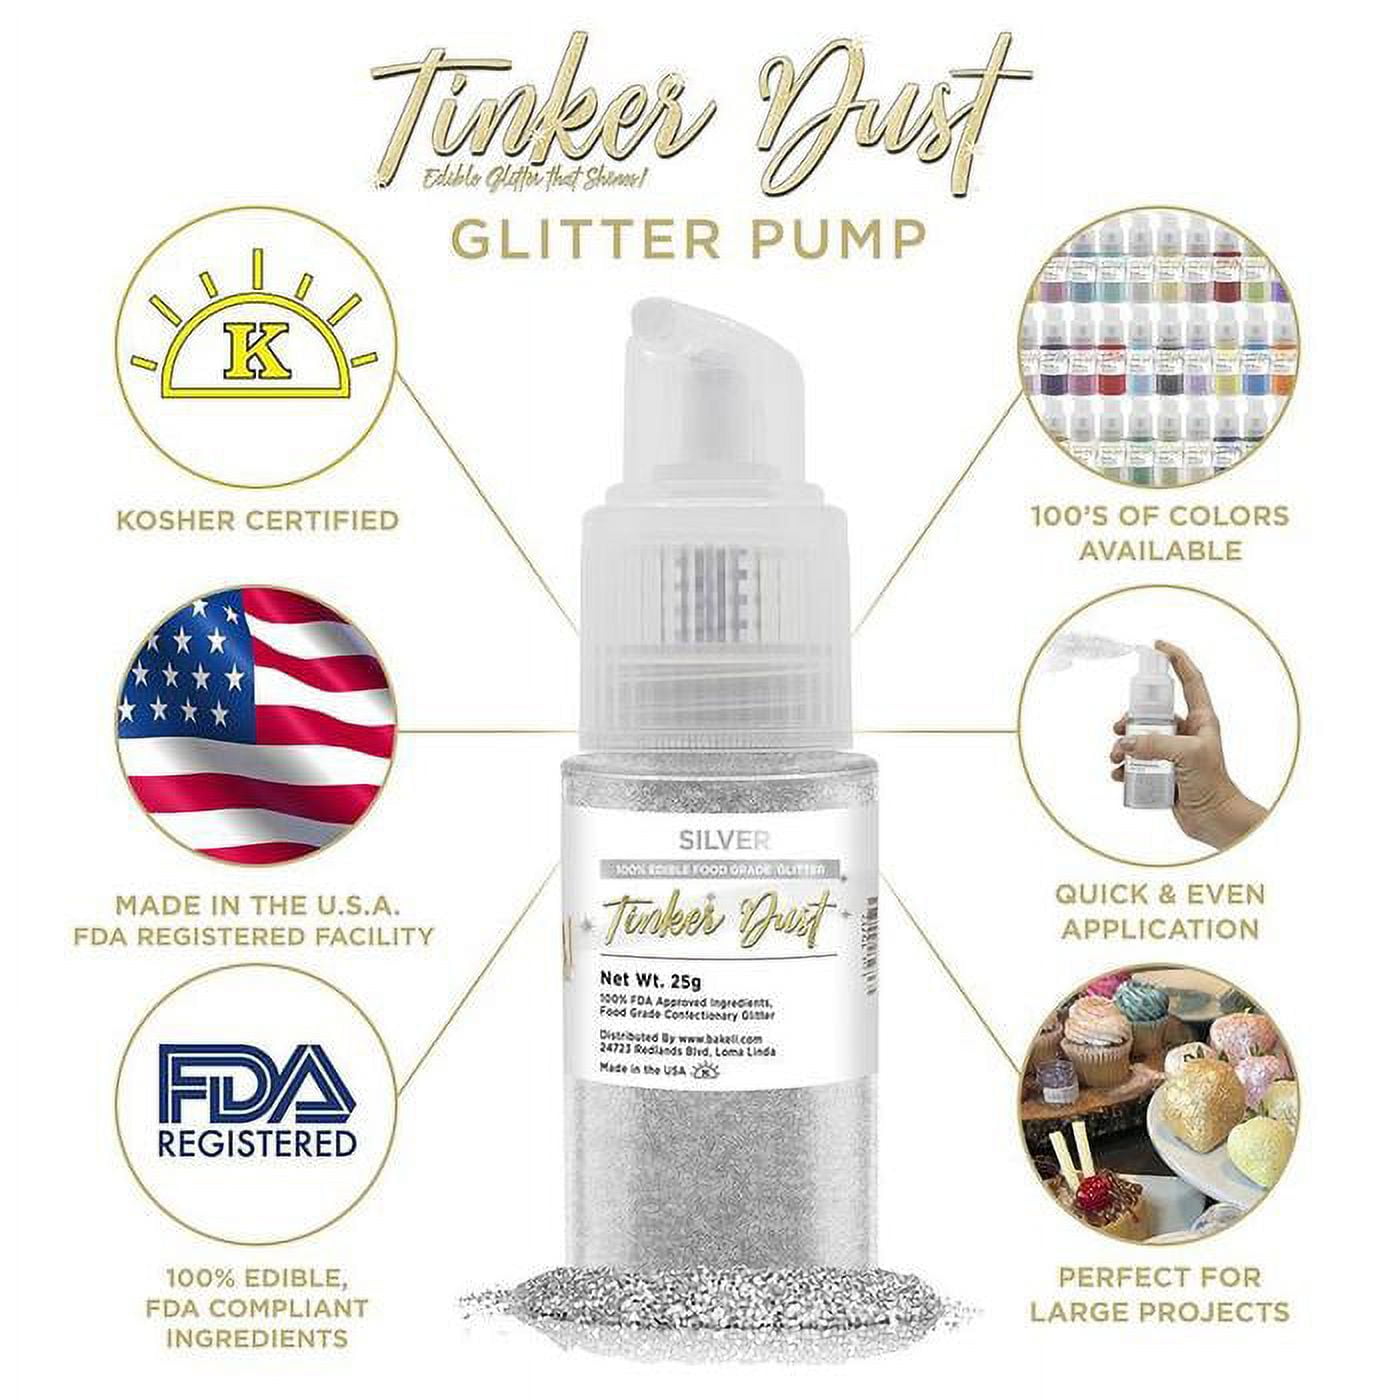 Edible Glitter Spray Pump Kit Pack A 4 SET Tinker Dust Edible Glitter 4th  of July Food & Dessert Decorating Glitters 